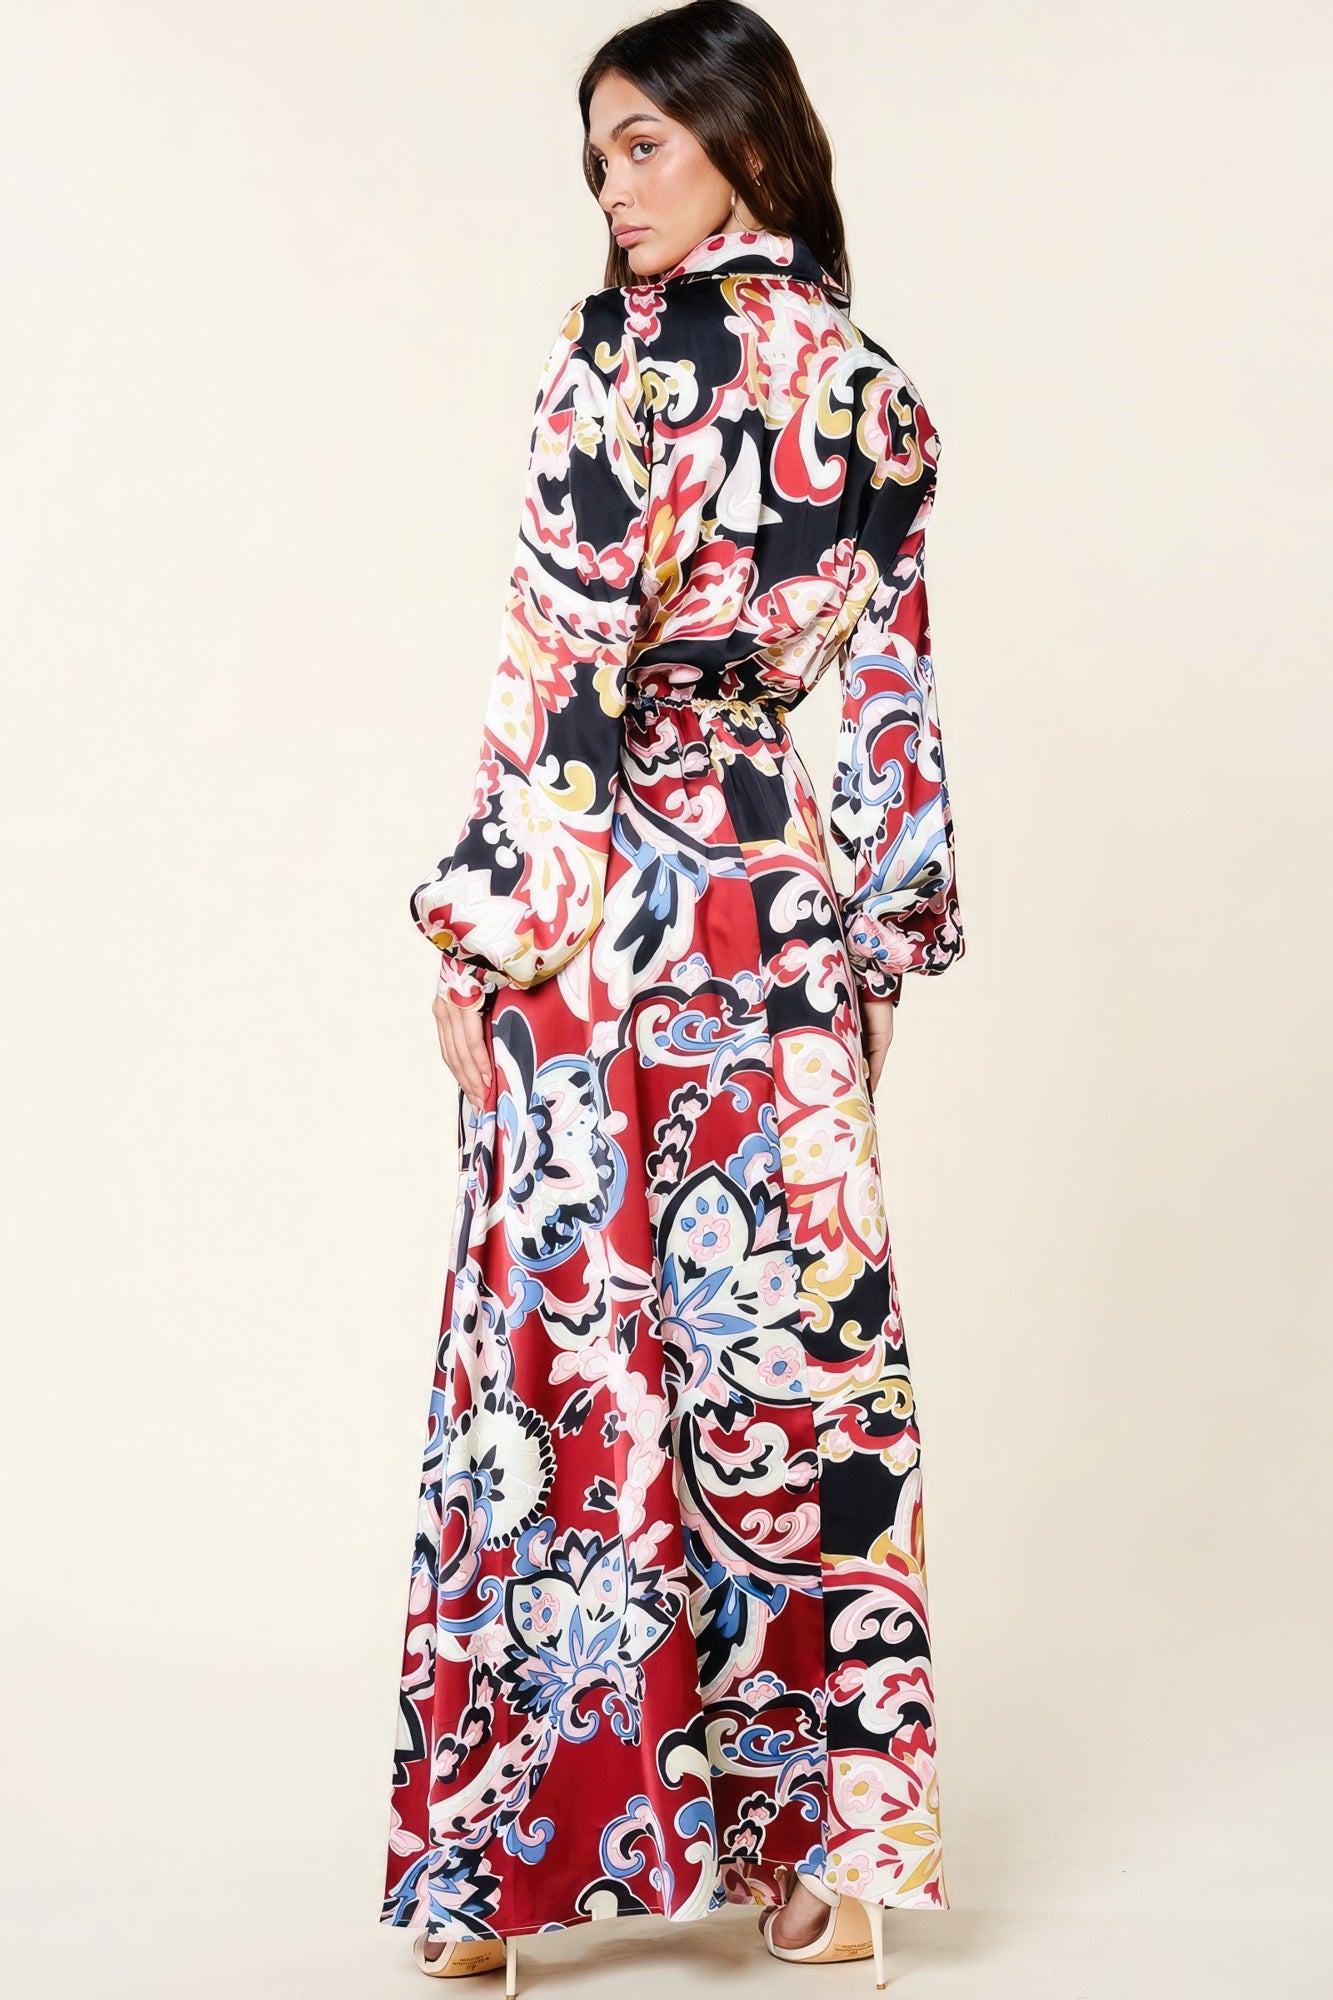 THE SAVANNAH Color Block Printed V Neck Dress